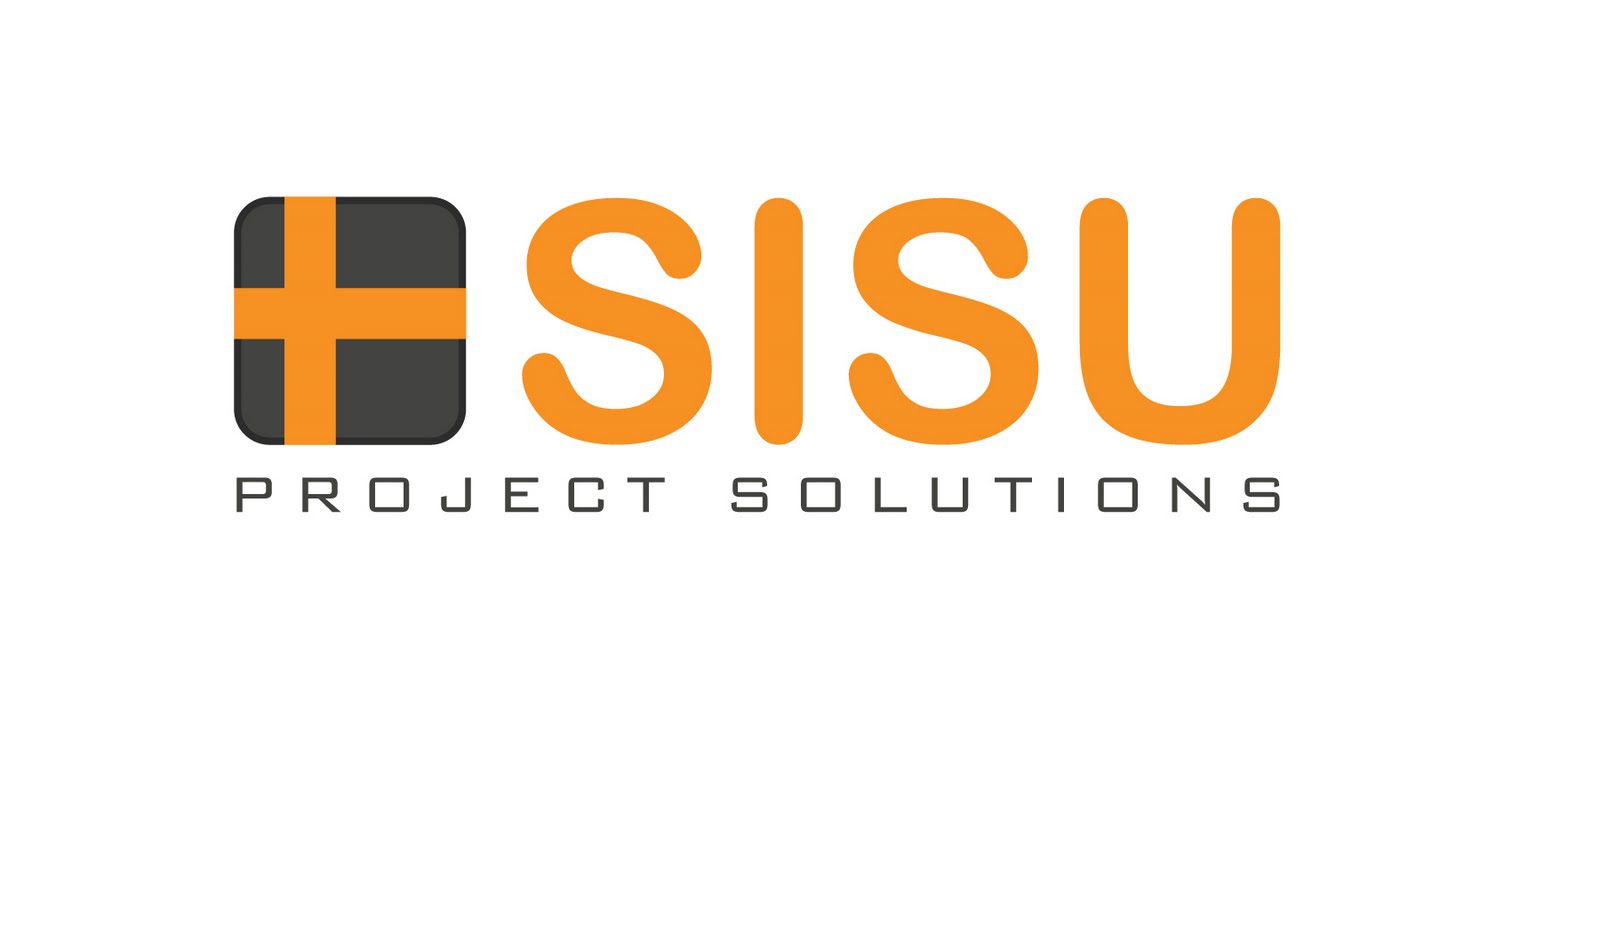 sisu logo